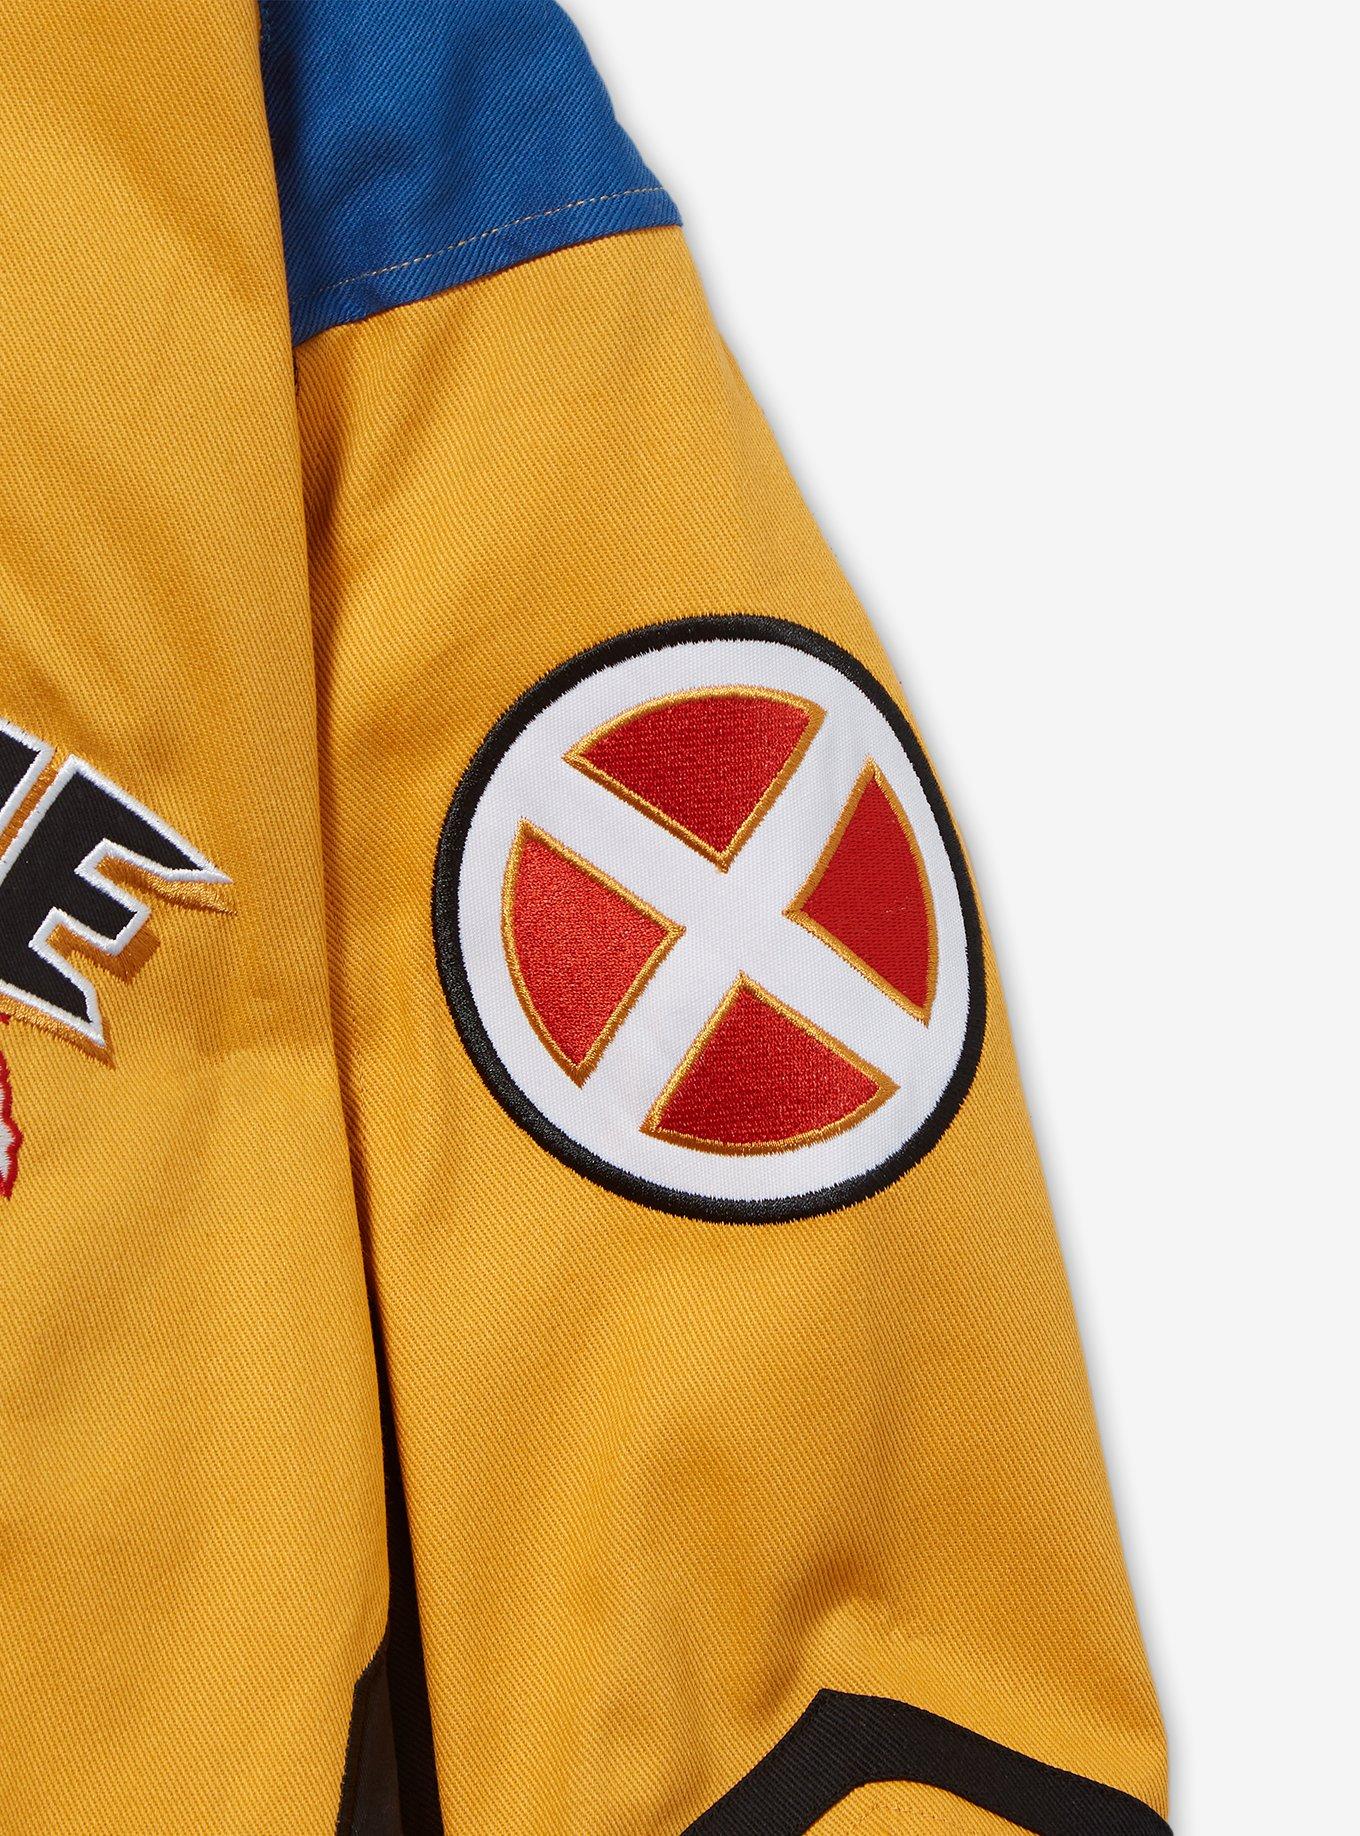 Marvel X-Men Wolverine Motocross Racing Jacket - BoxLunch Exclusive, , alternate